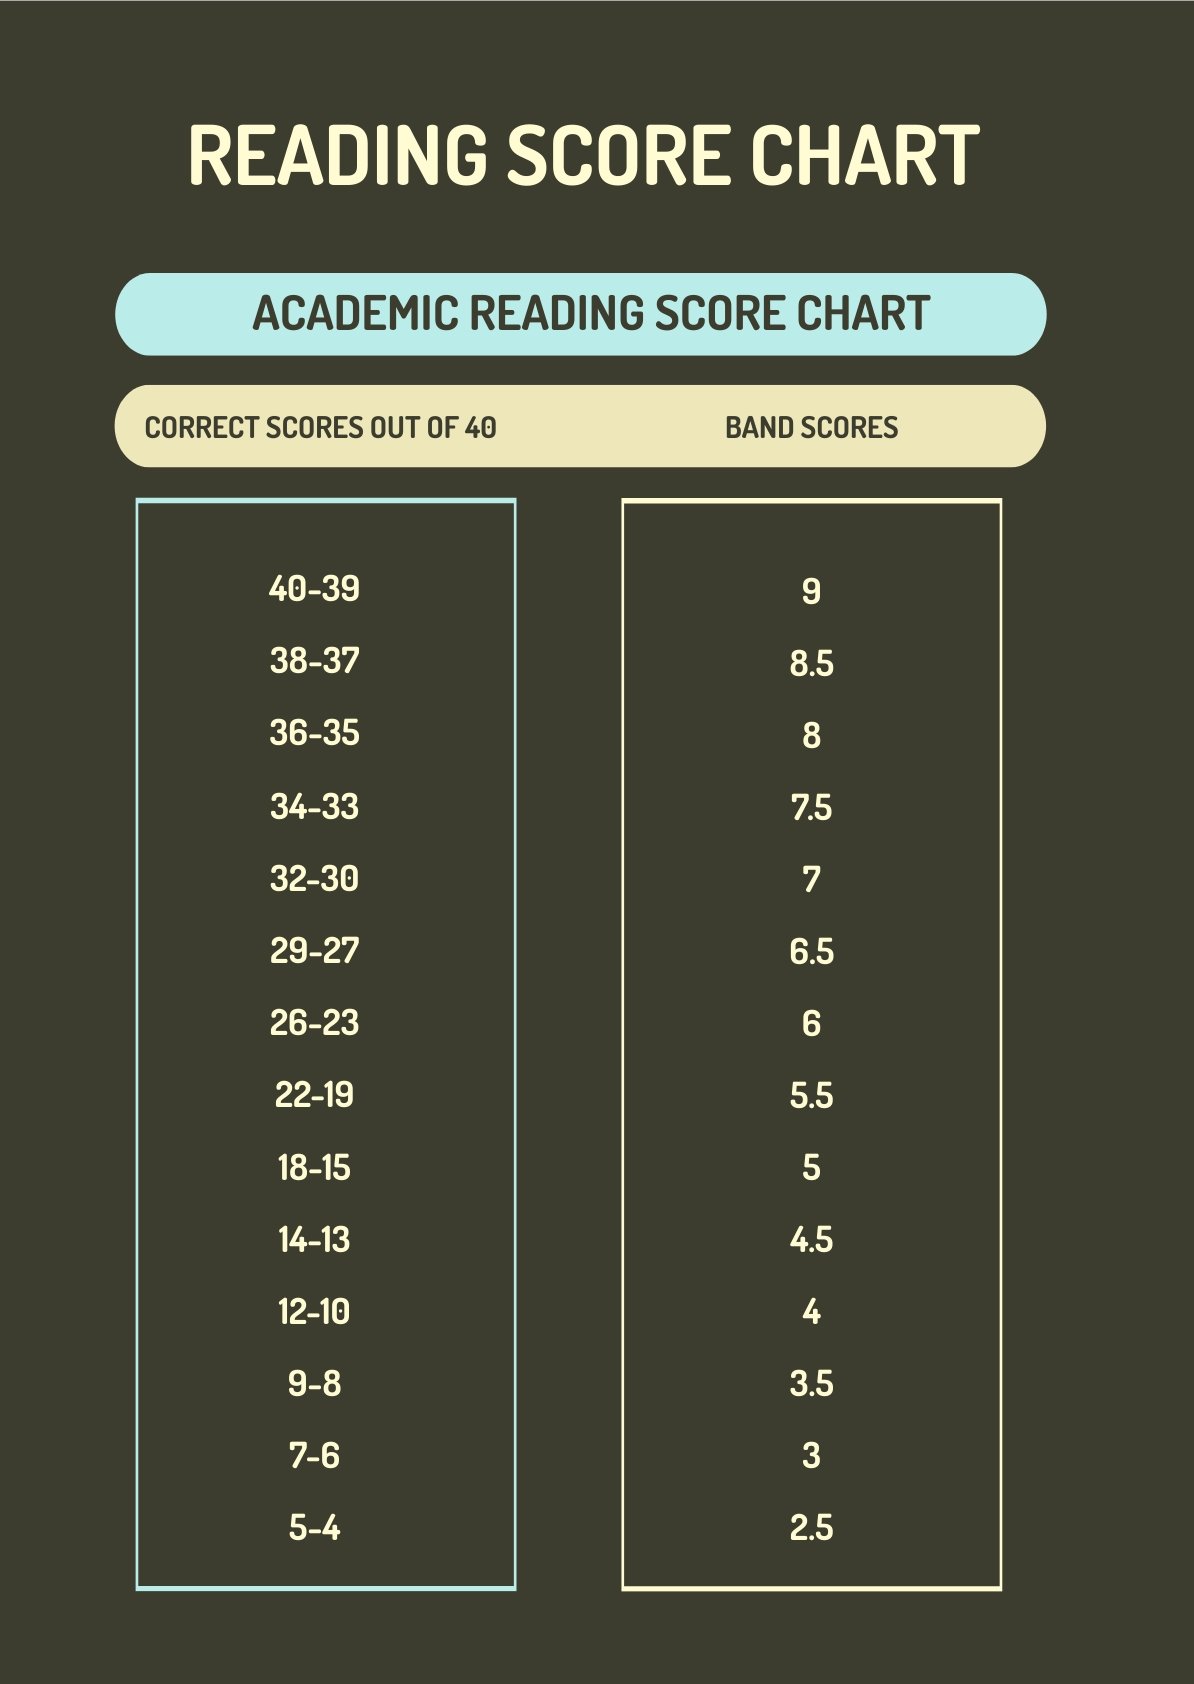 Reading Score Chart in PDF, Illustrator